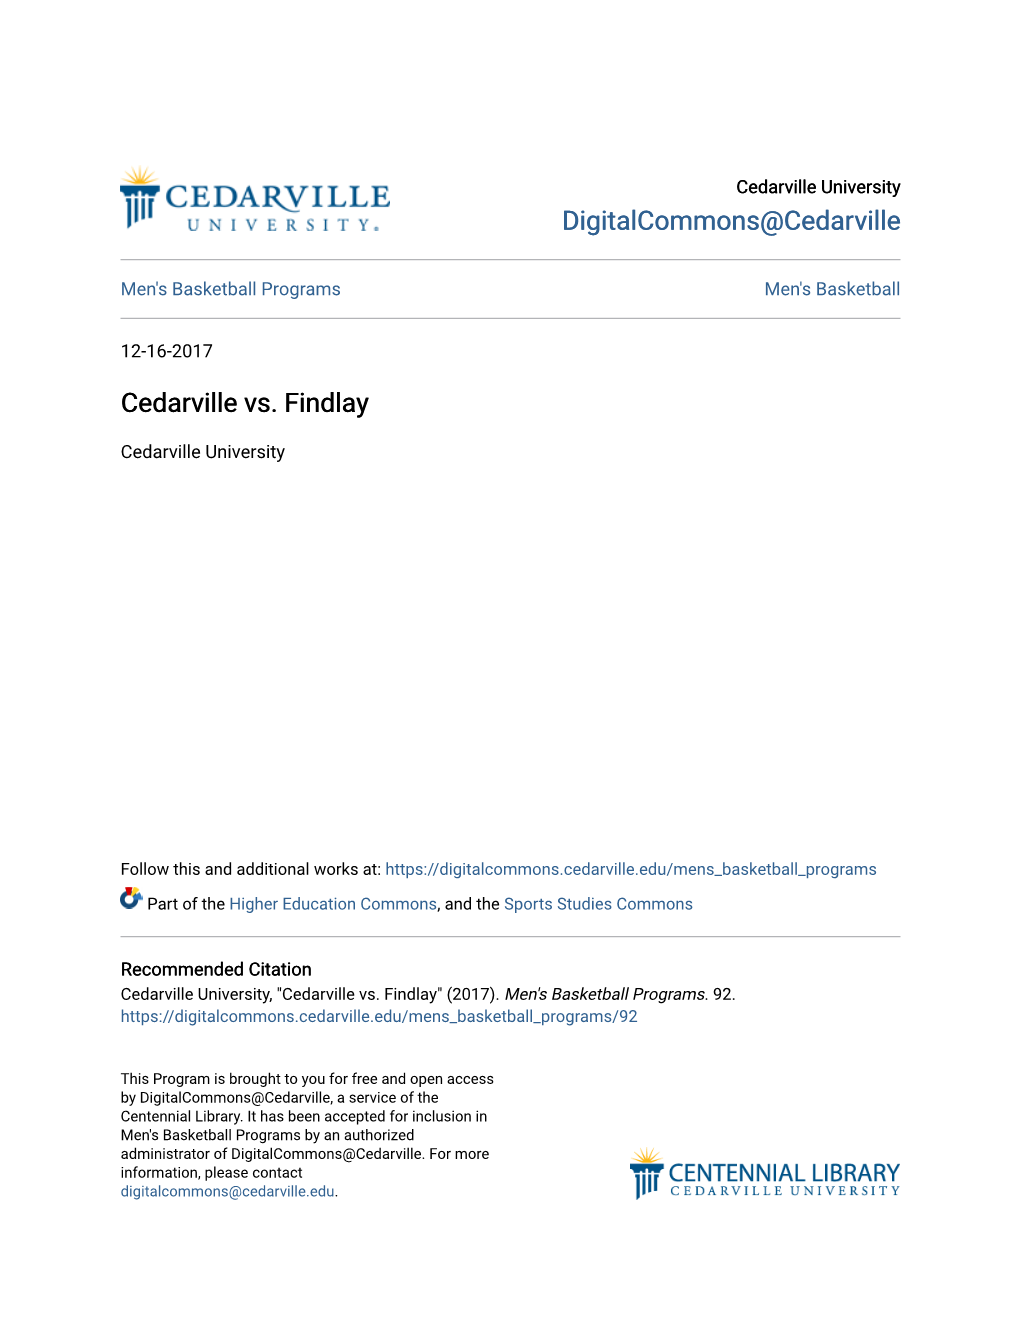 Cedarville Vs. Findlay